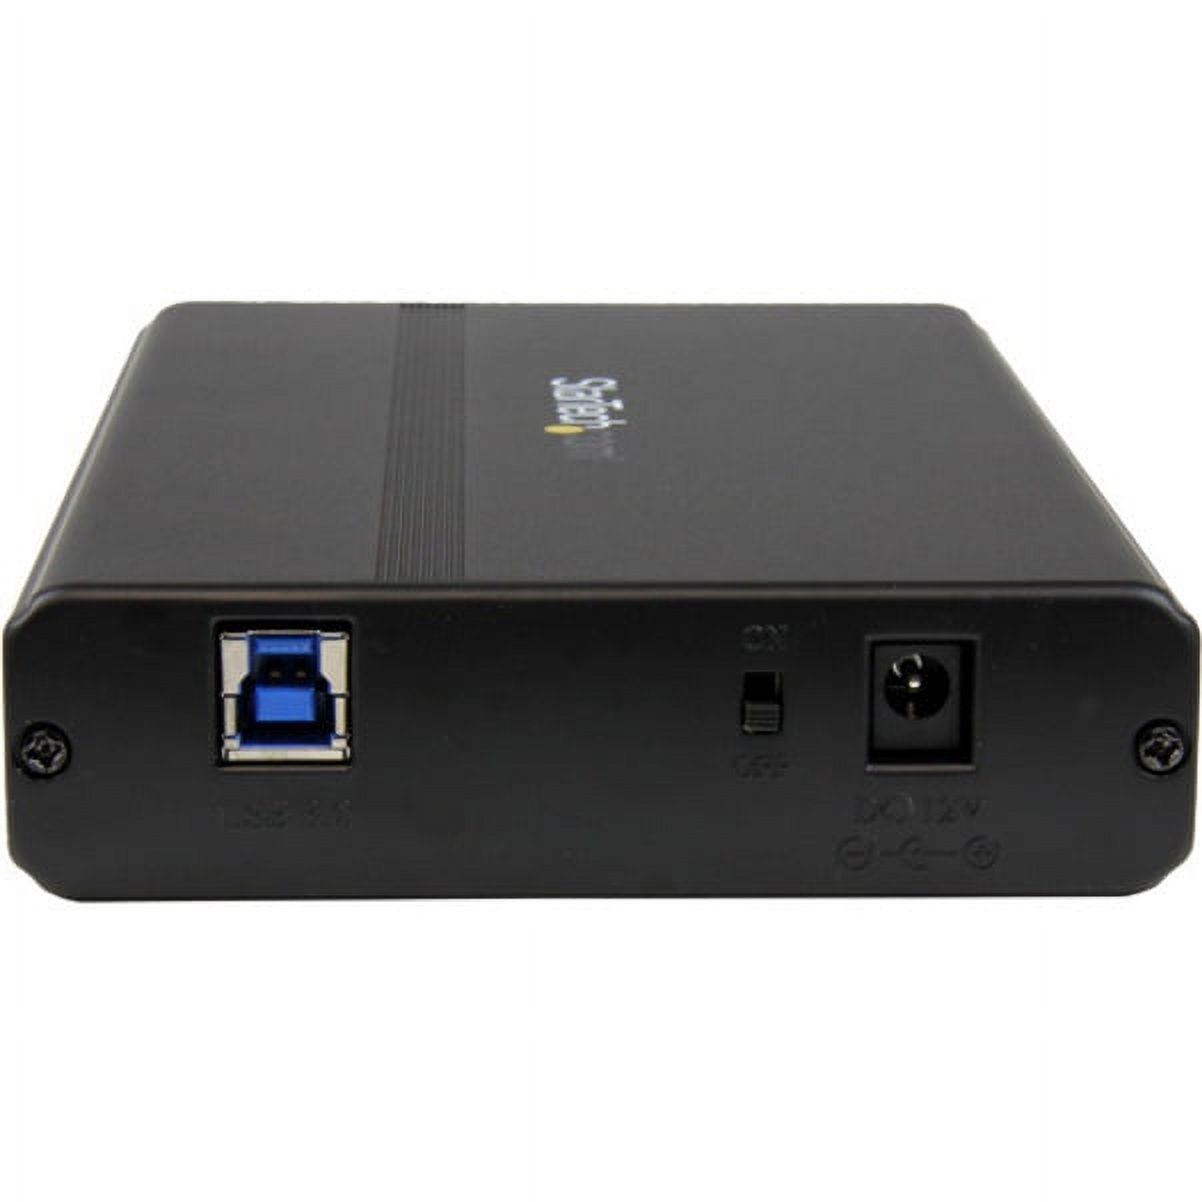 StarTech.com 3.5in USB 3.0 External IDE / SATA III Universal Hard Drive Enclosure, Portable External HDD - image 2 of 3